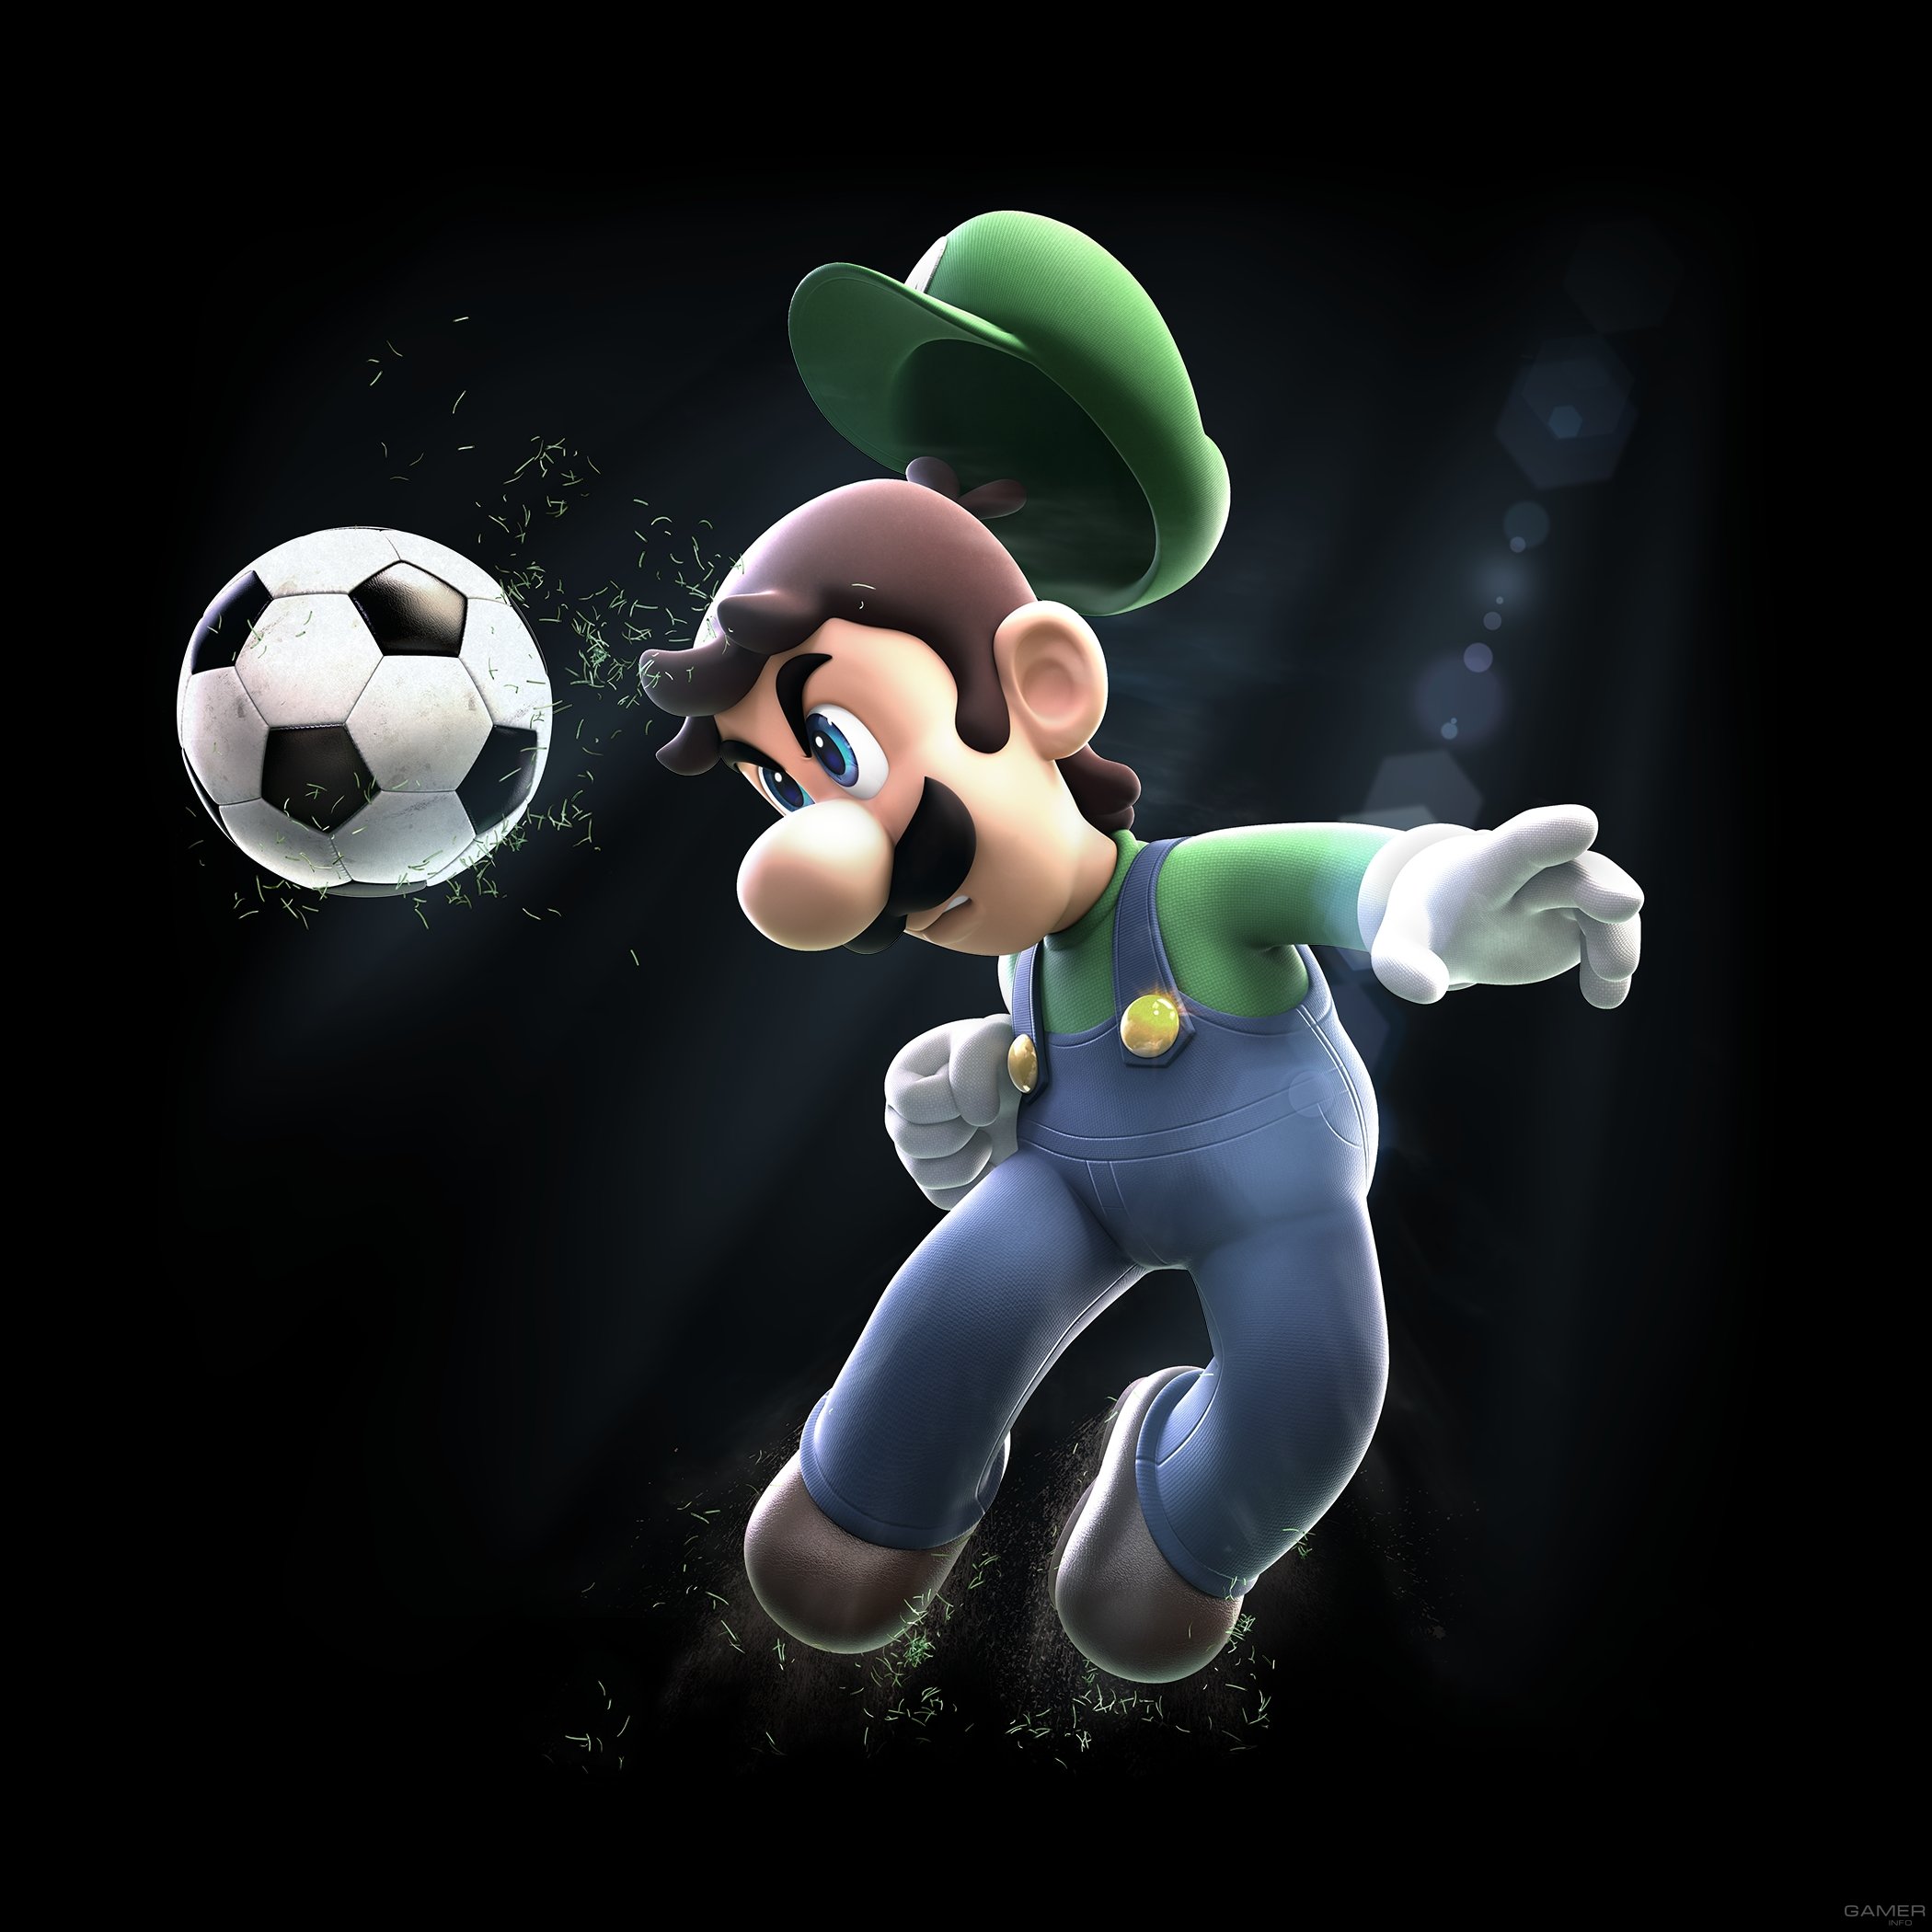 Mario bros 5. Луиджи (персонаж) персонажи игр Mario. Супер Марио БРОС Луиджи. Марио персонажи Луиджи. Супер Марио и Луиджи игра.